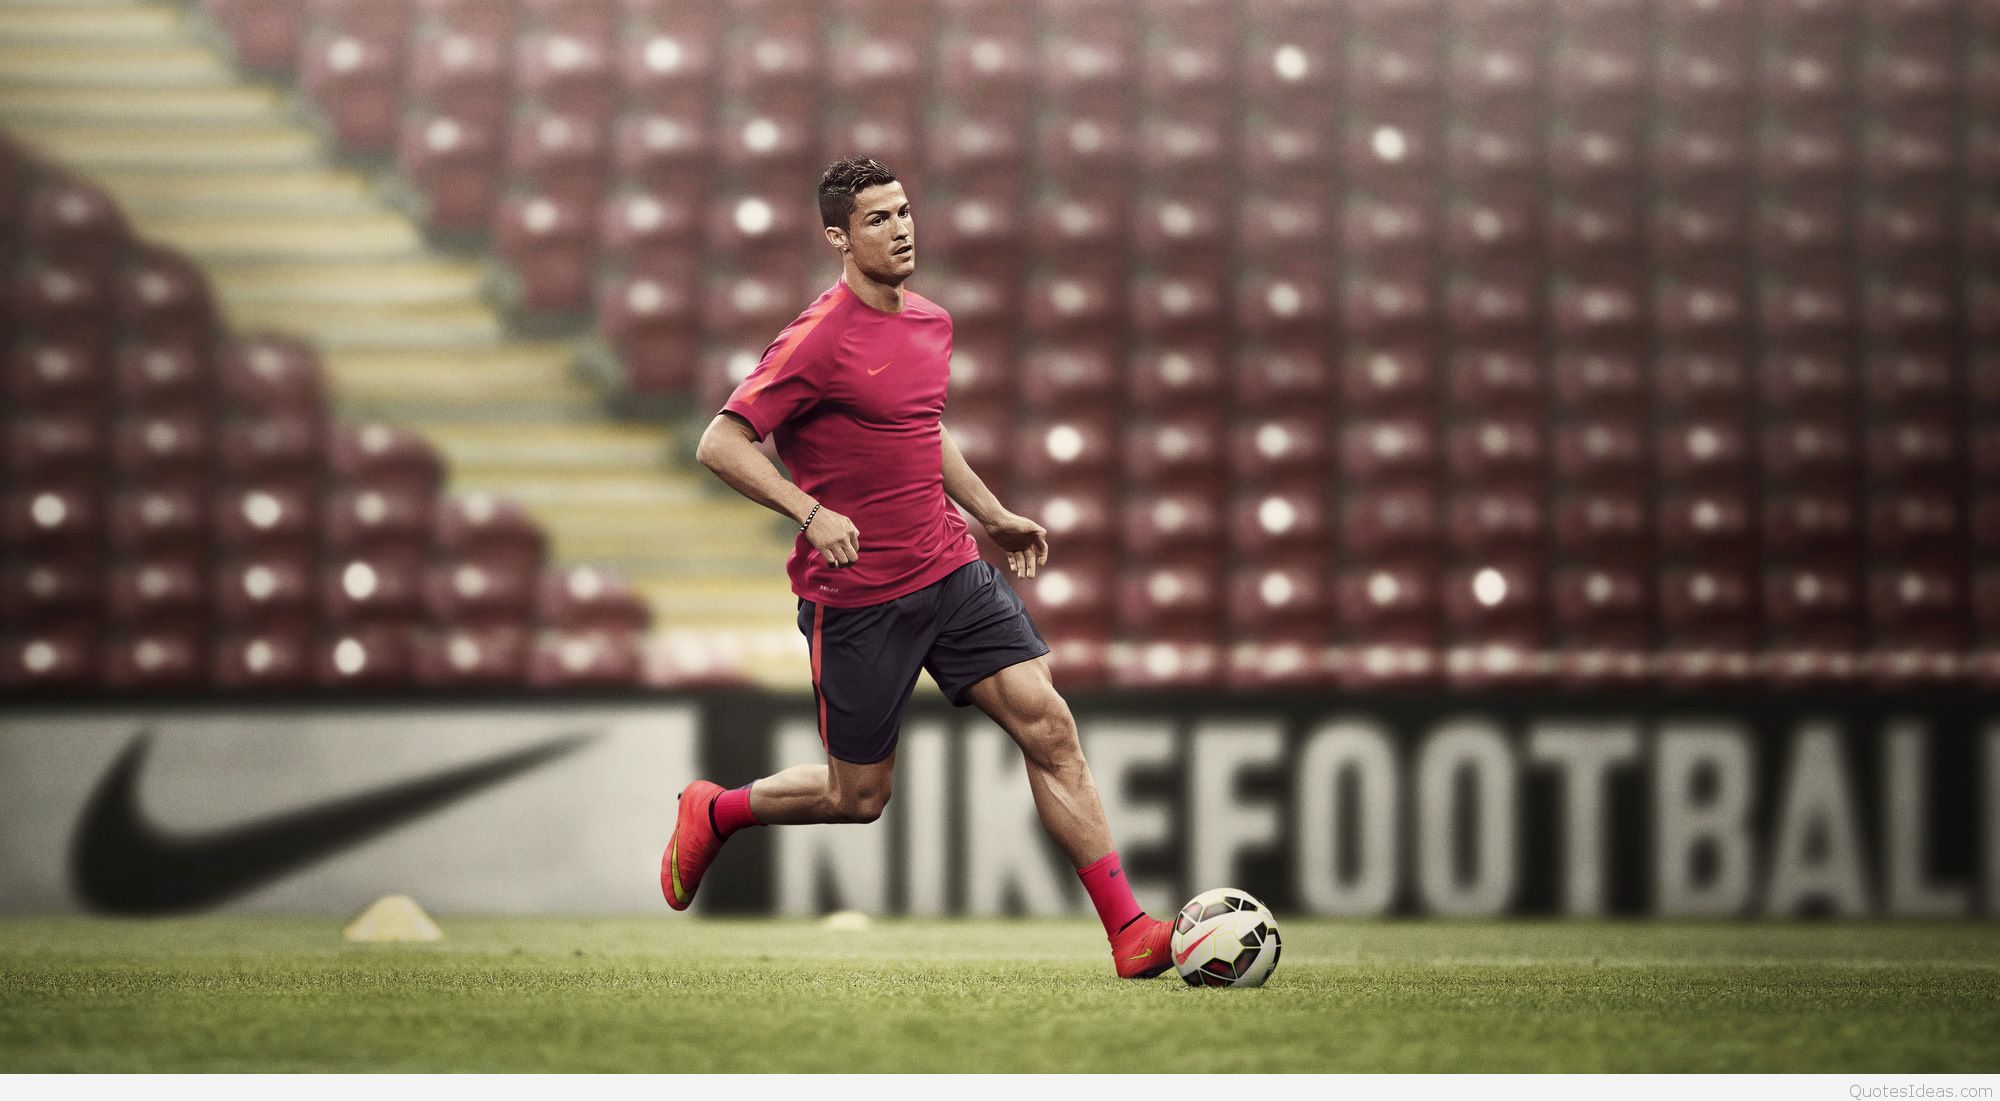 Cristiano Ronaldo Nike Wallpapers